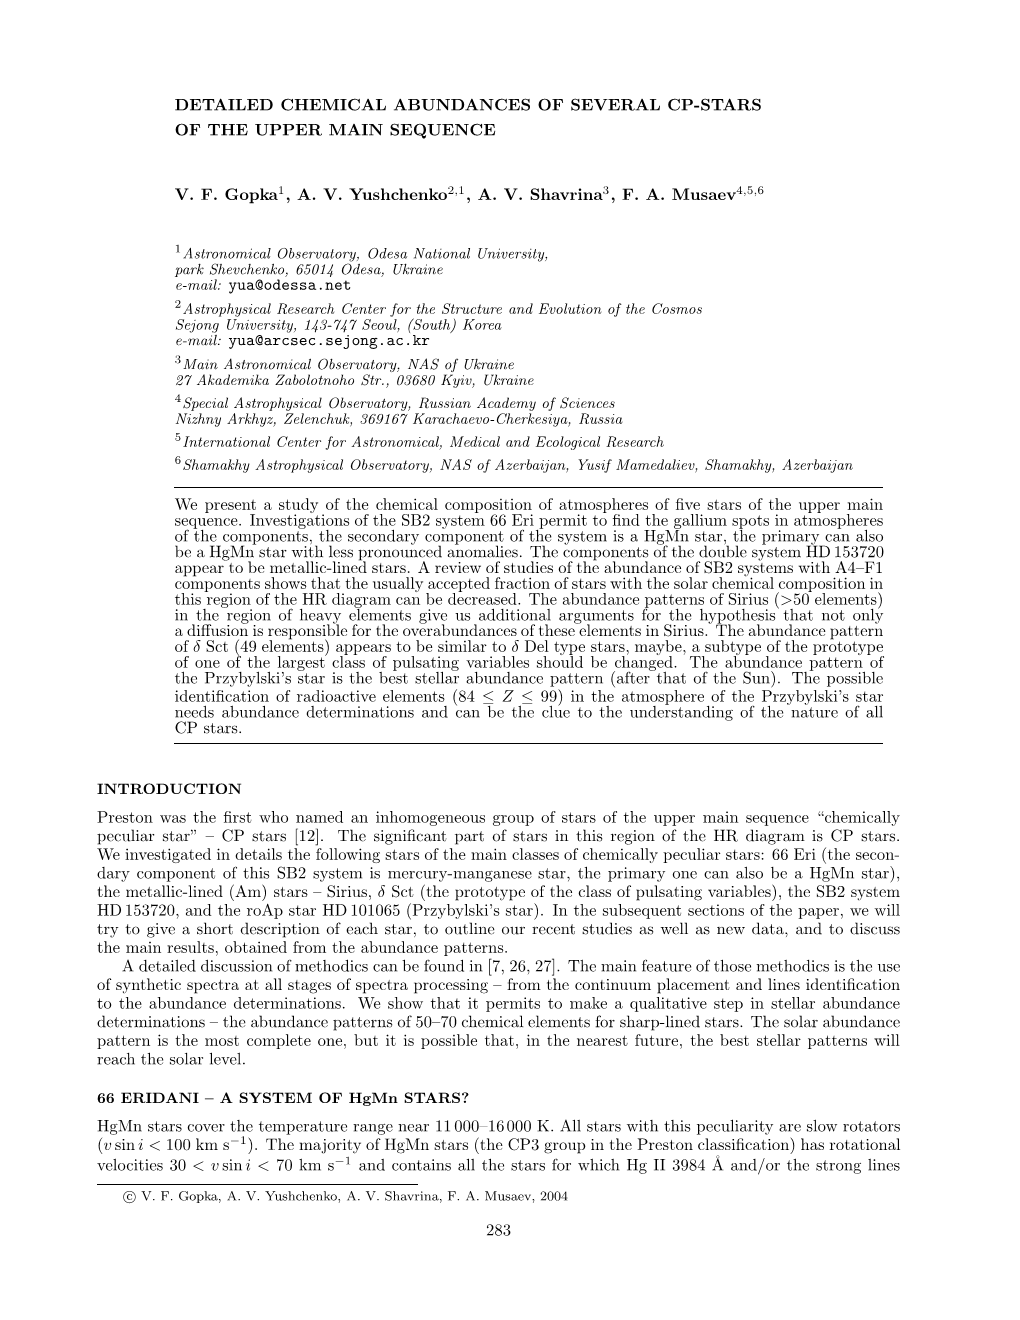 DETAILED CHEMICAL ABUNDANCES of SEVERAL CP-STARS of the UPPER MAIN SEQUENCE V. F. Gopka1, A. V. Yushchenko2,1, A. V. Shavrina3